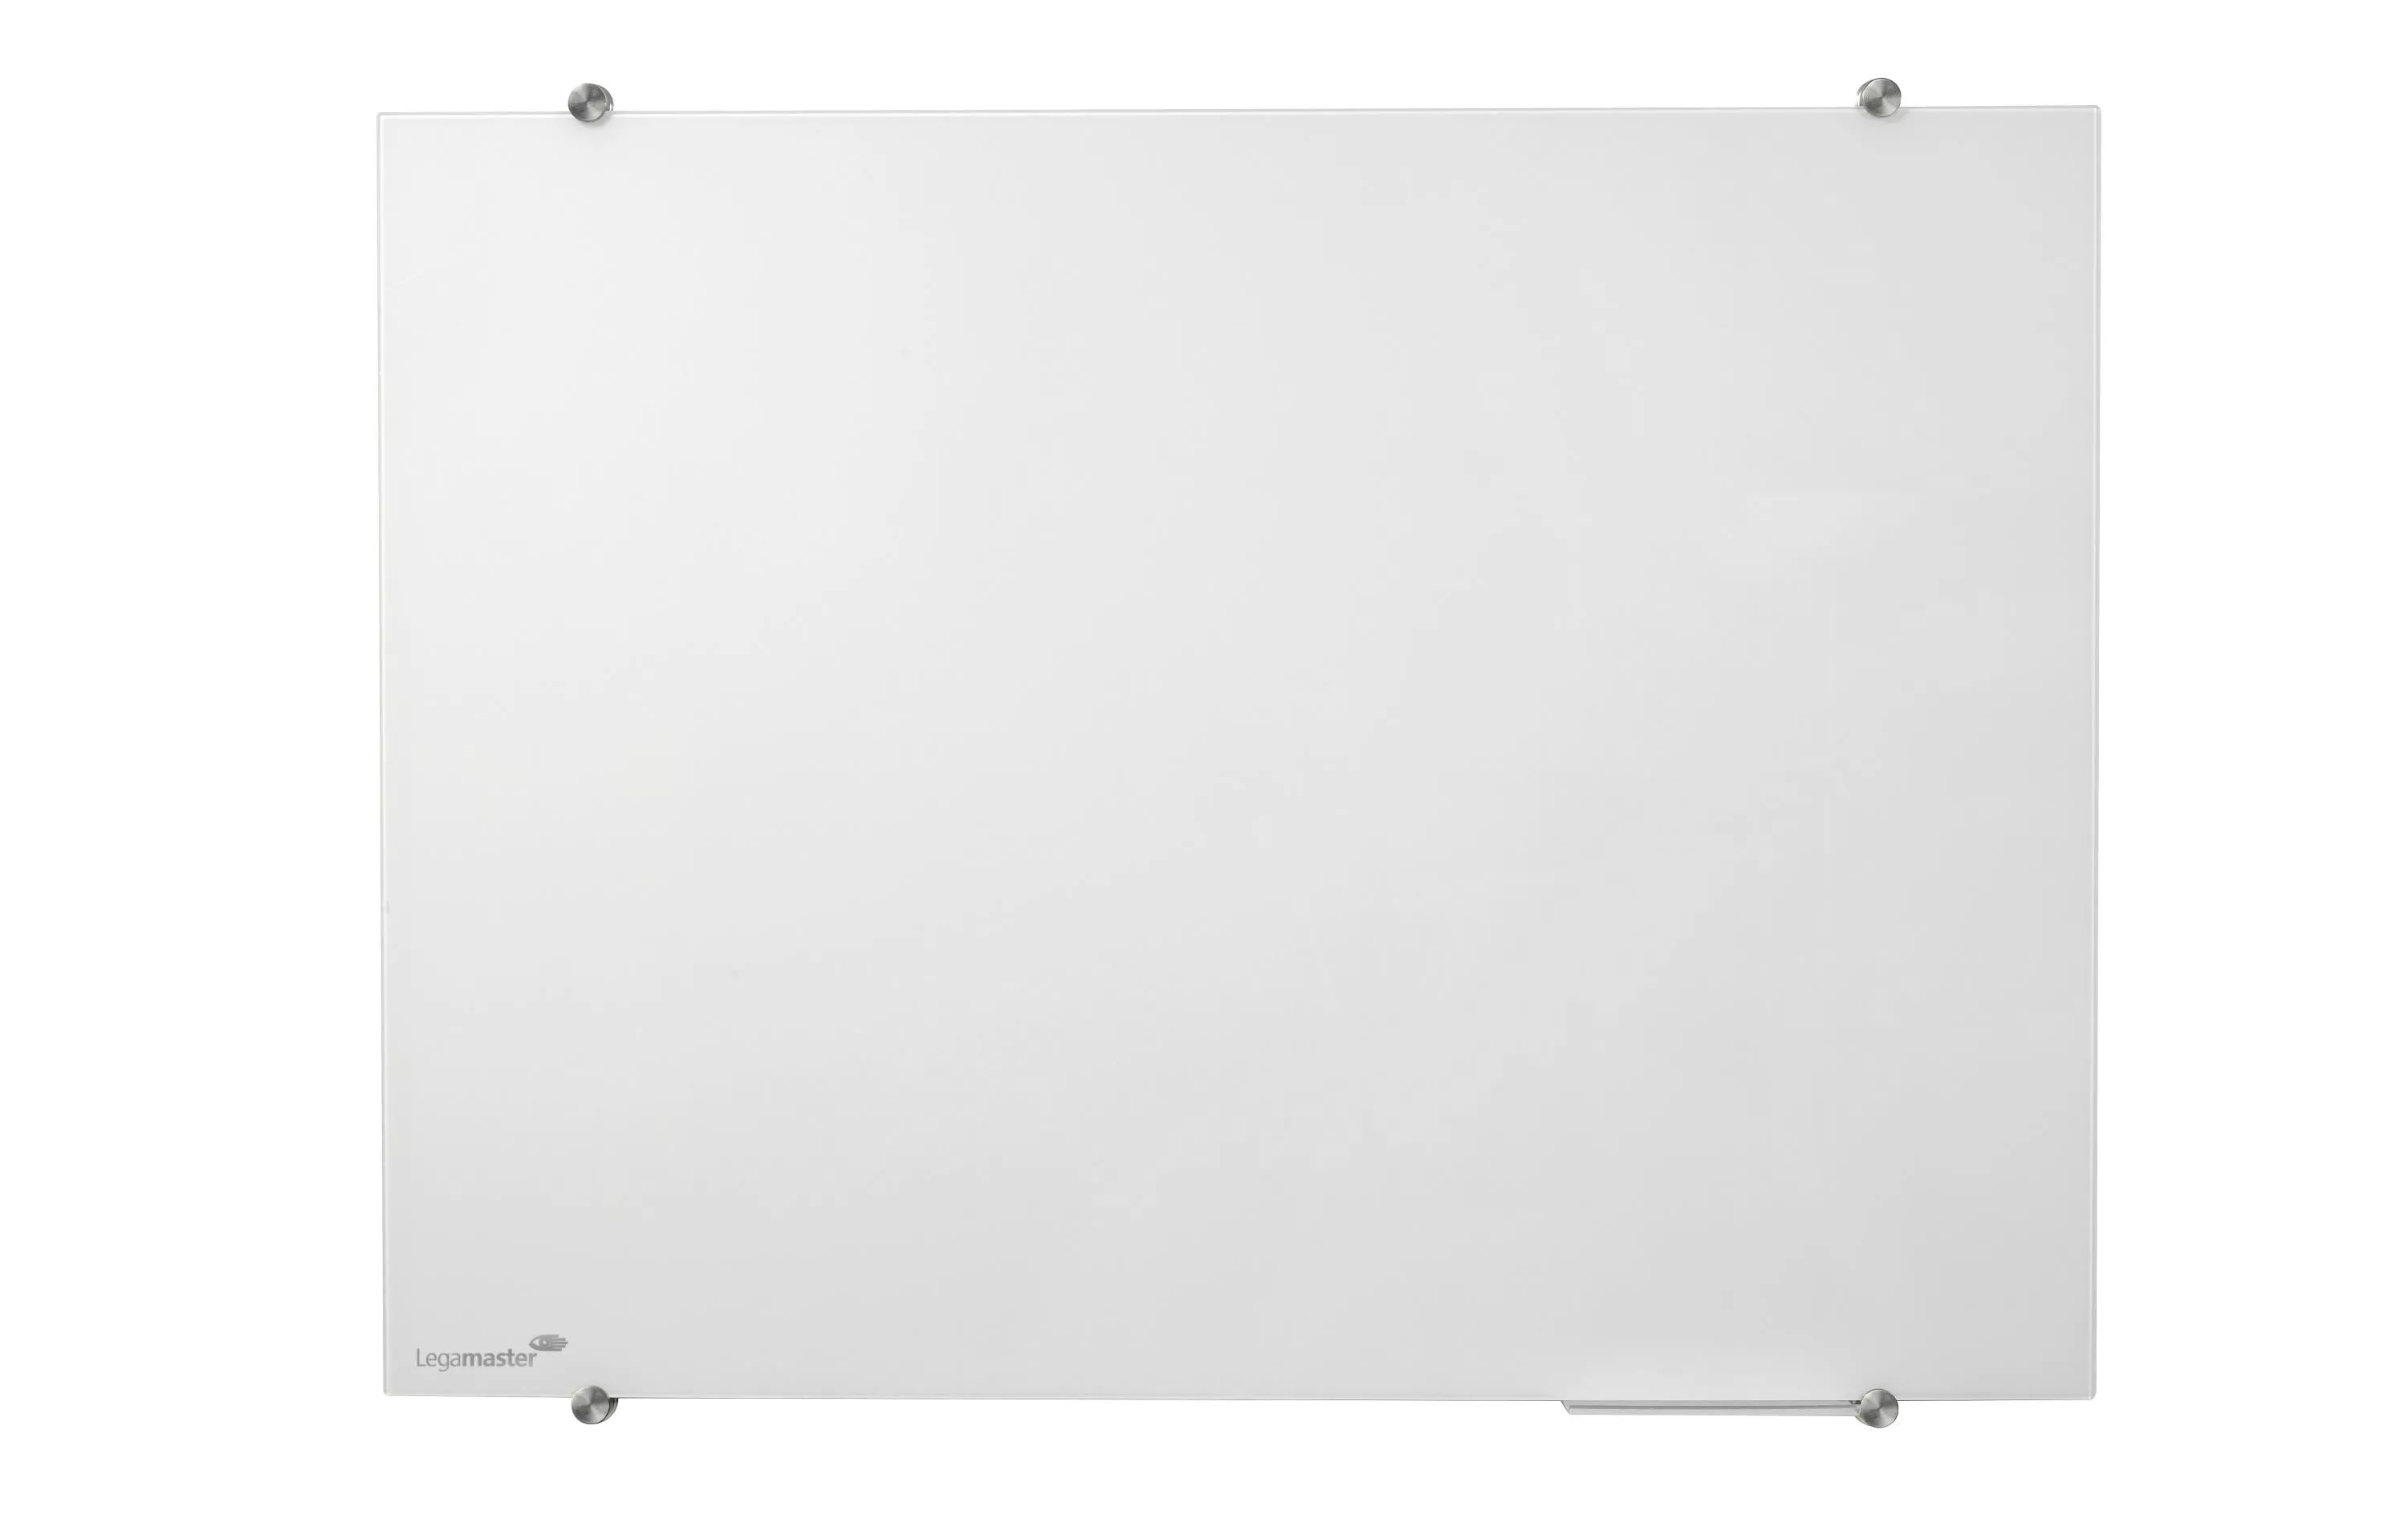 Magnethaftendes Glassboard Colour 90 cm x 120 cm, Weiss